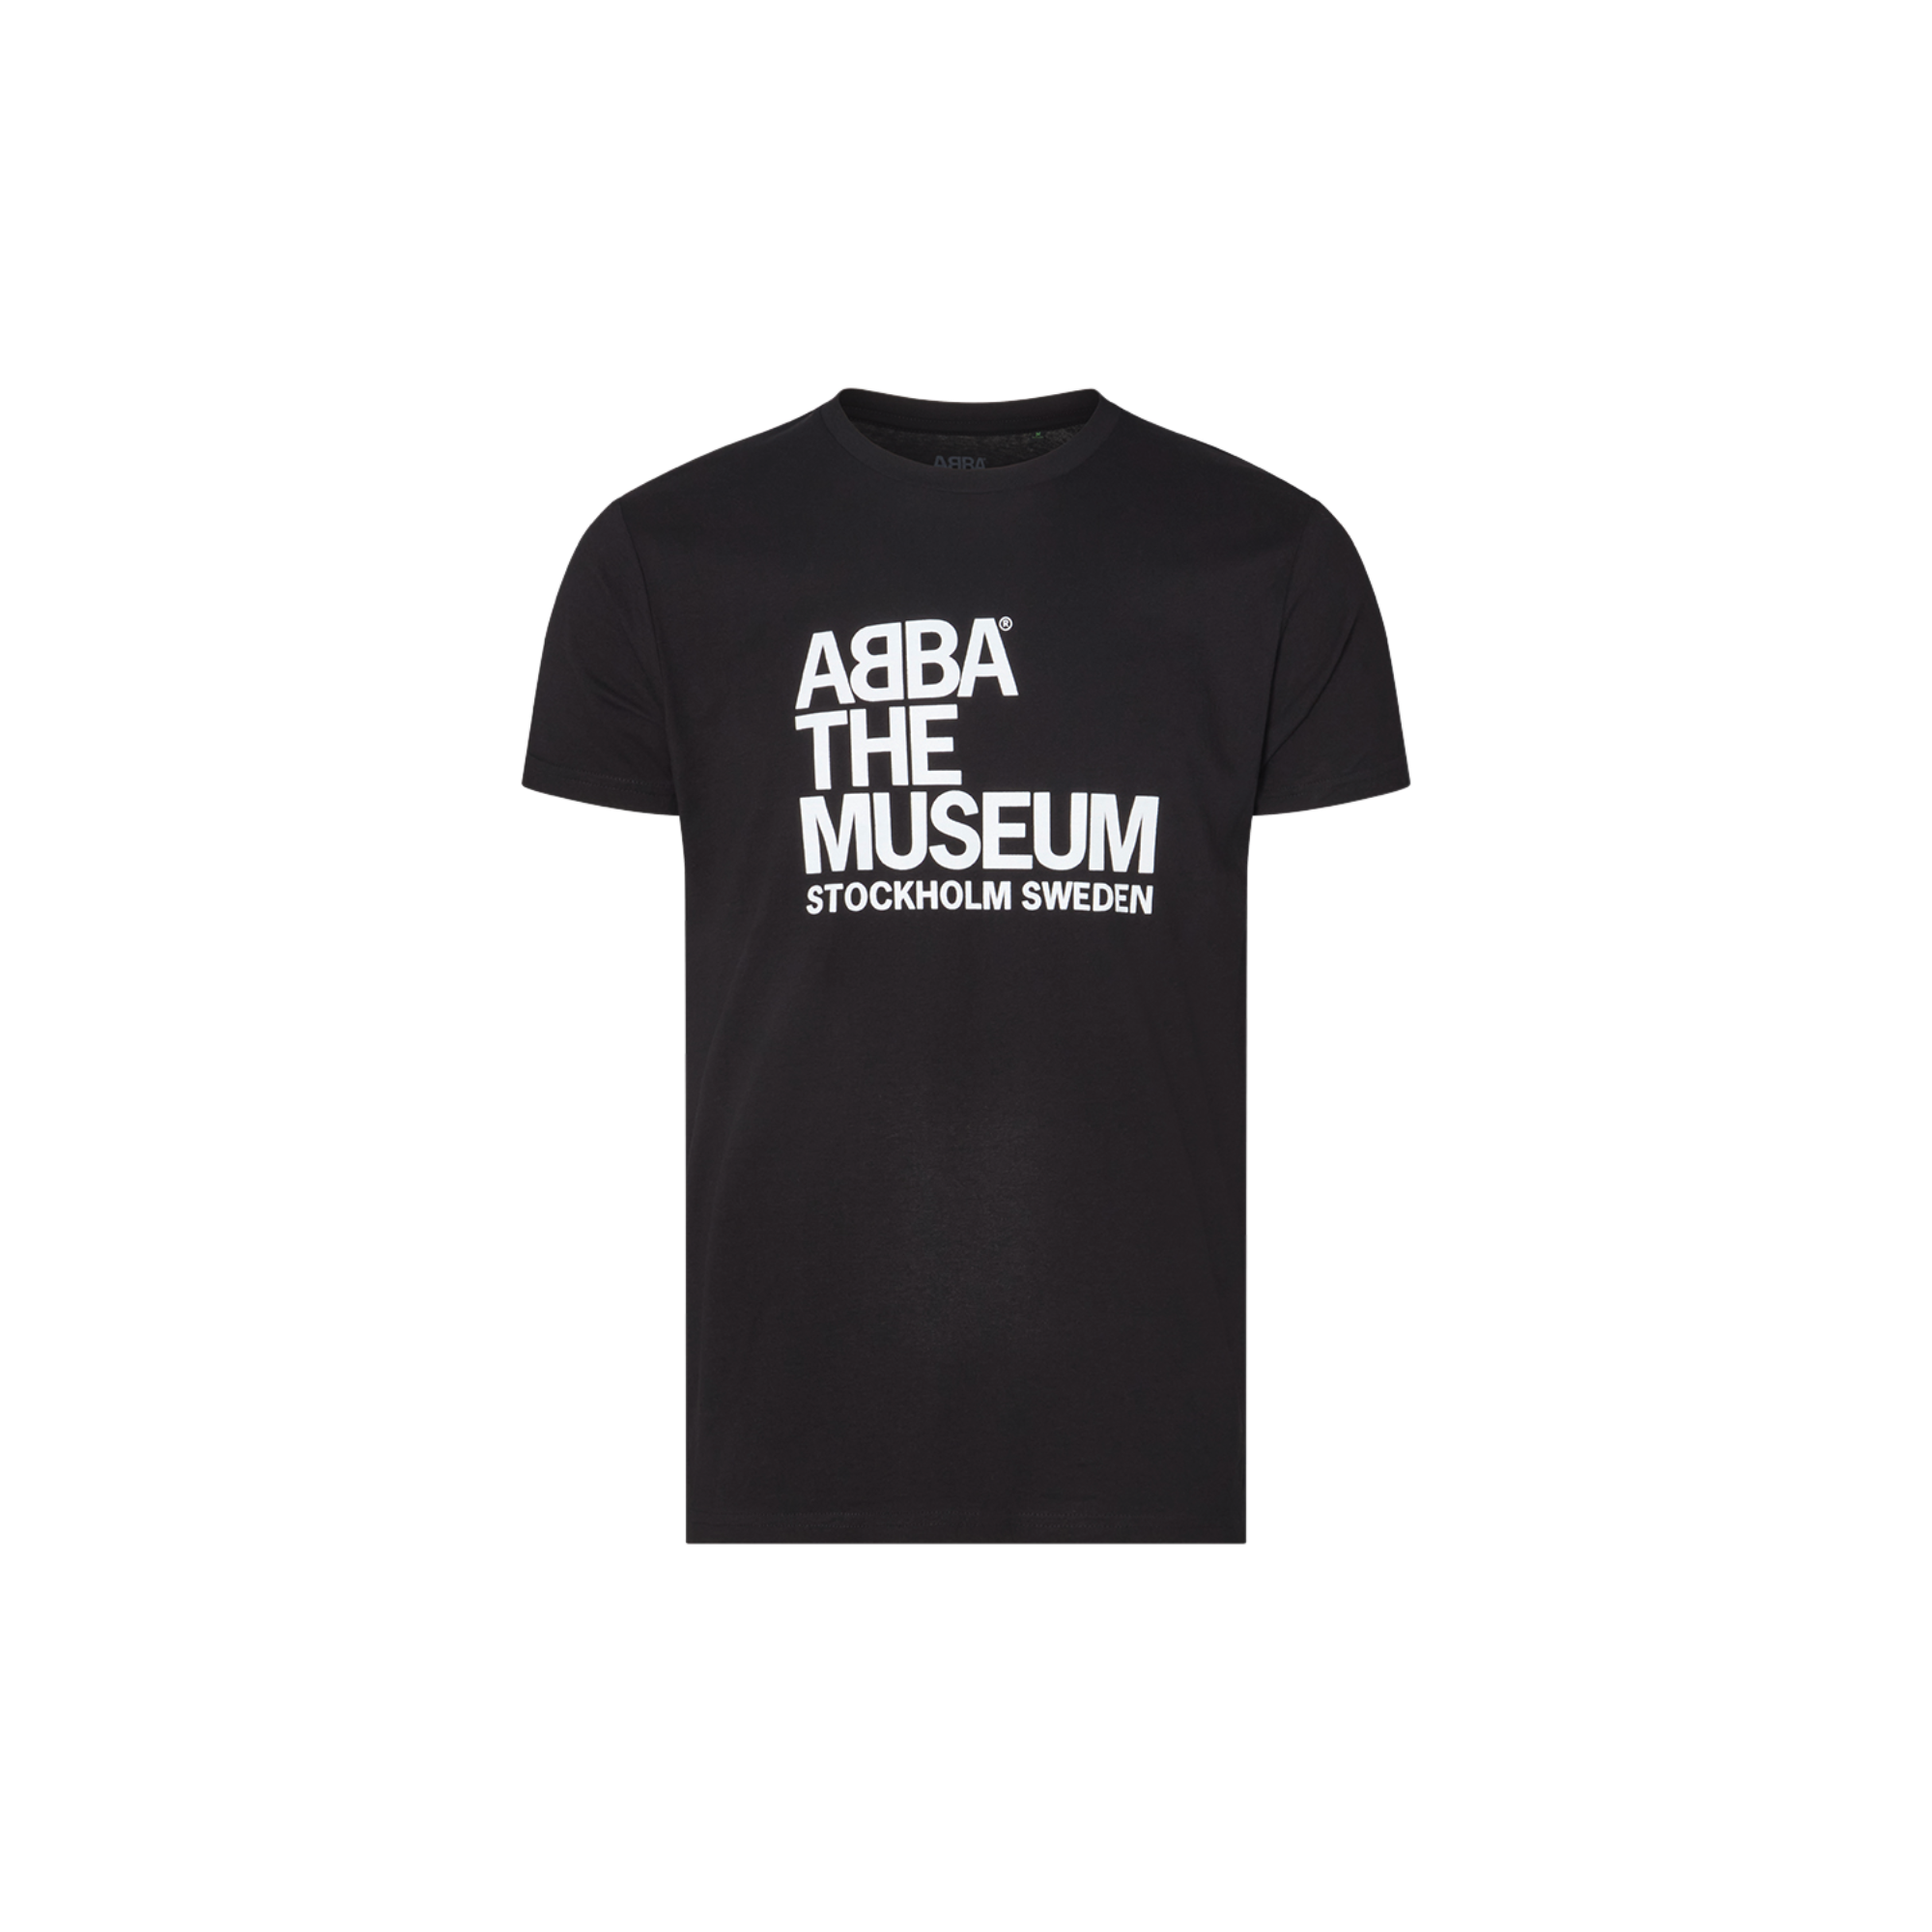 ABBA The Museum t-shirt